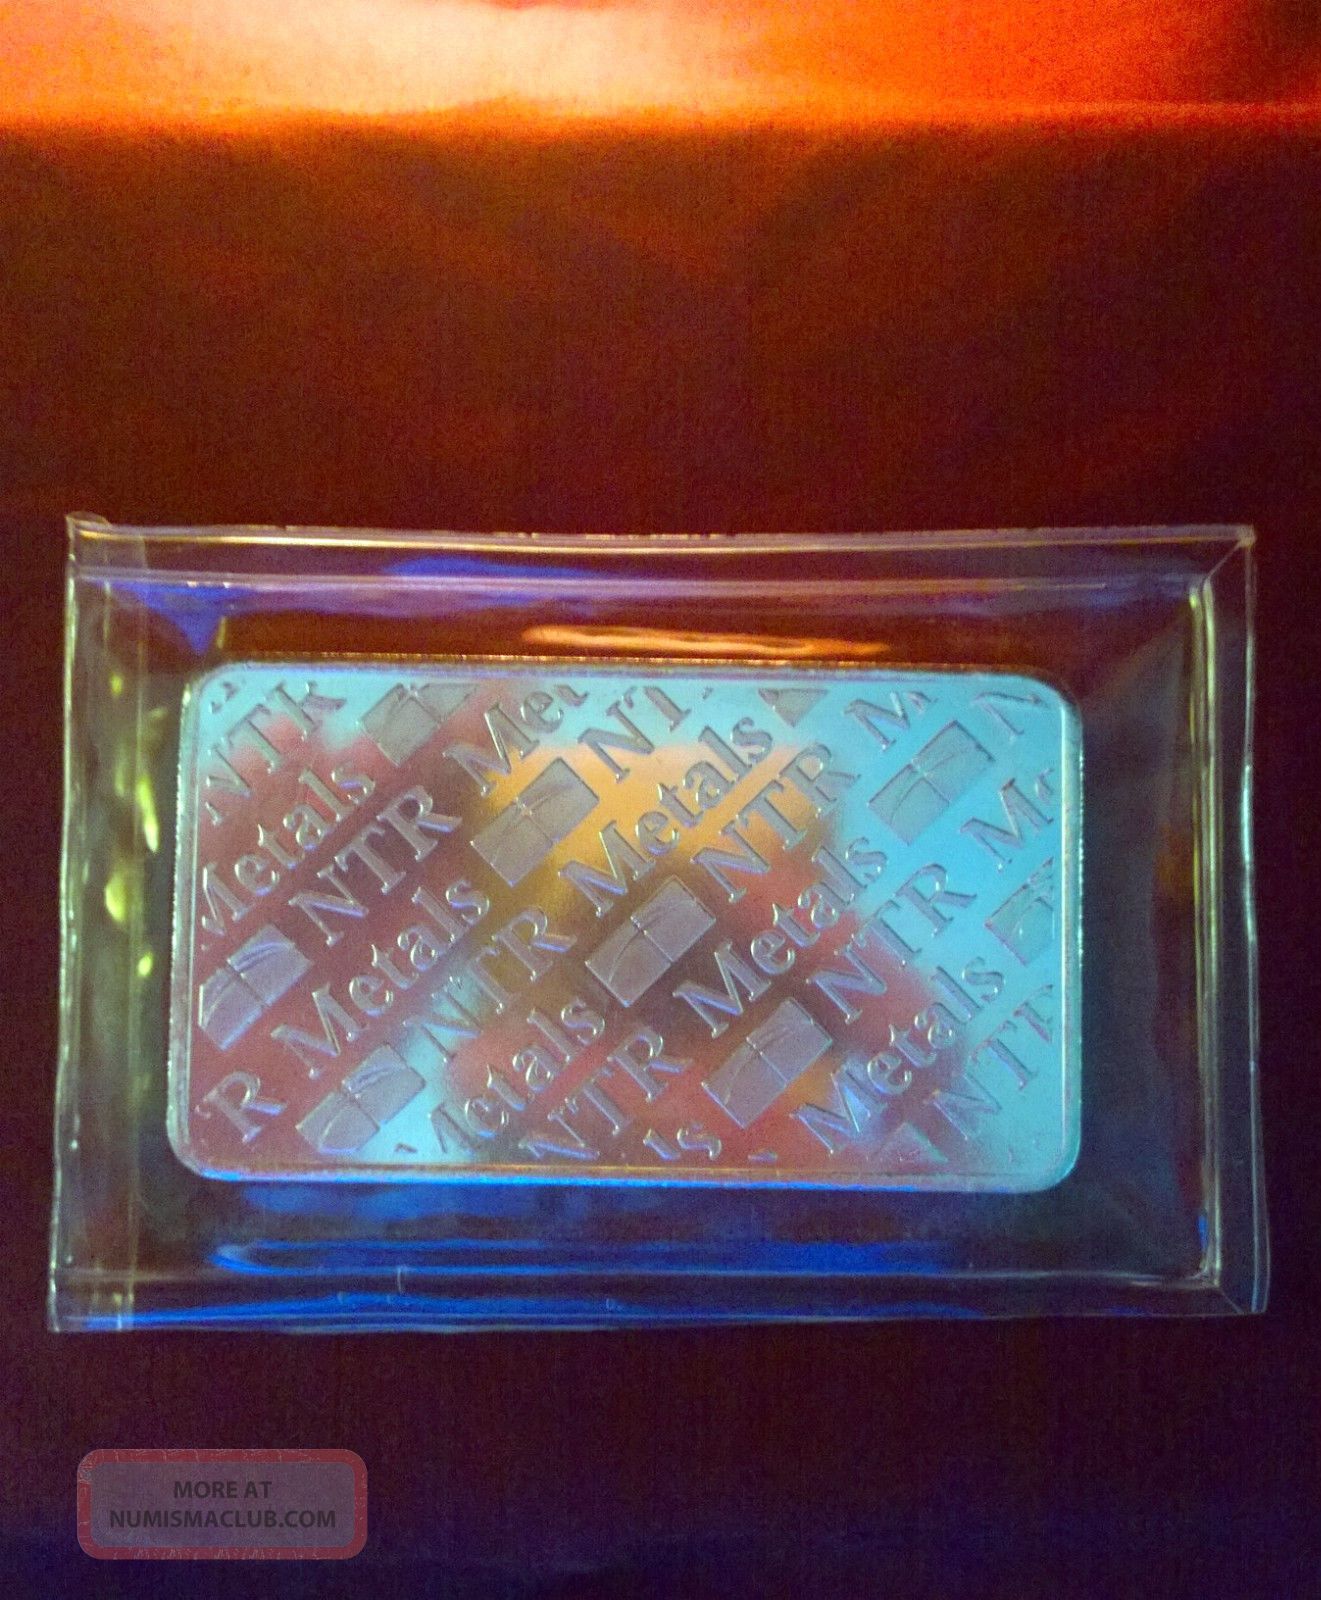 Ntr Metals 10 Ounce Silver Bar Bullion Orgininal Packaging 2010